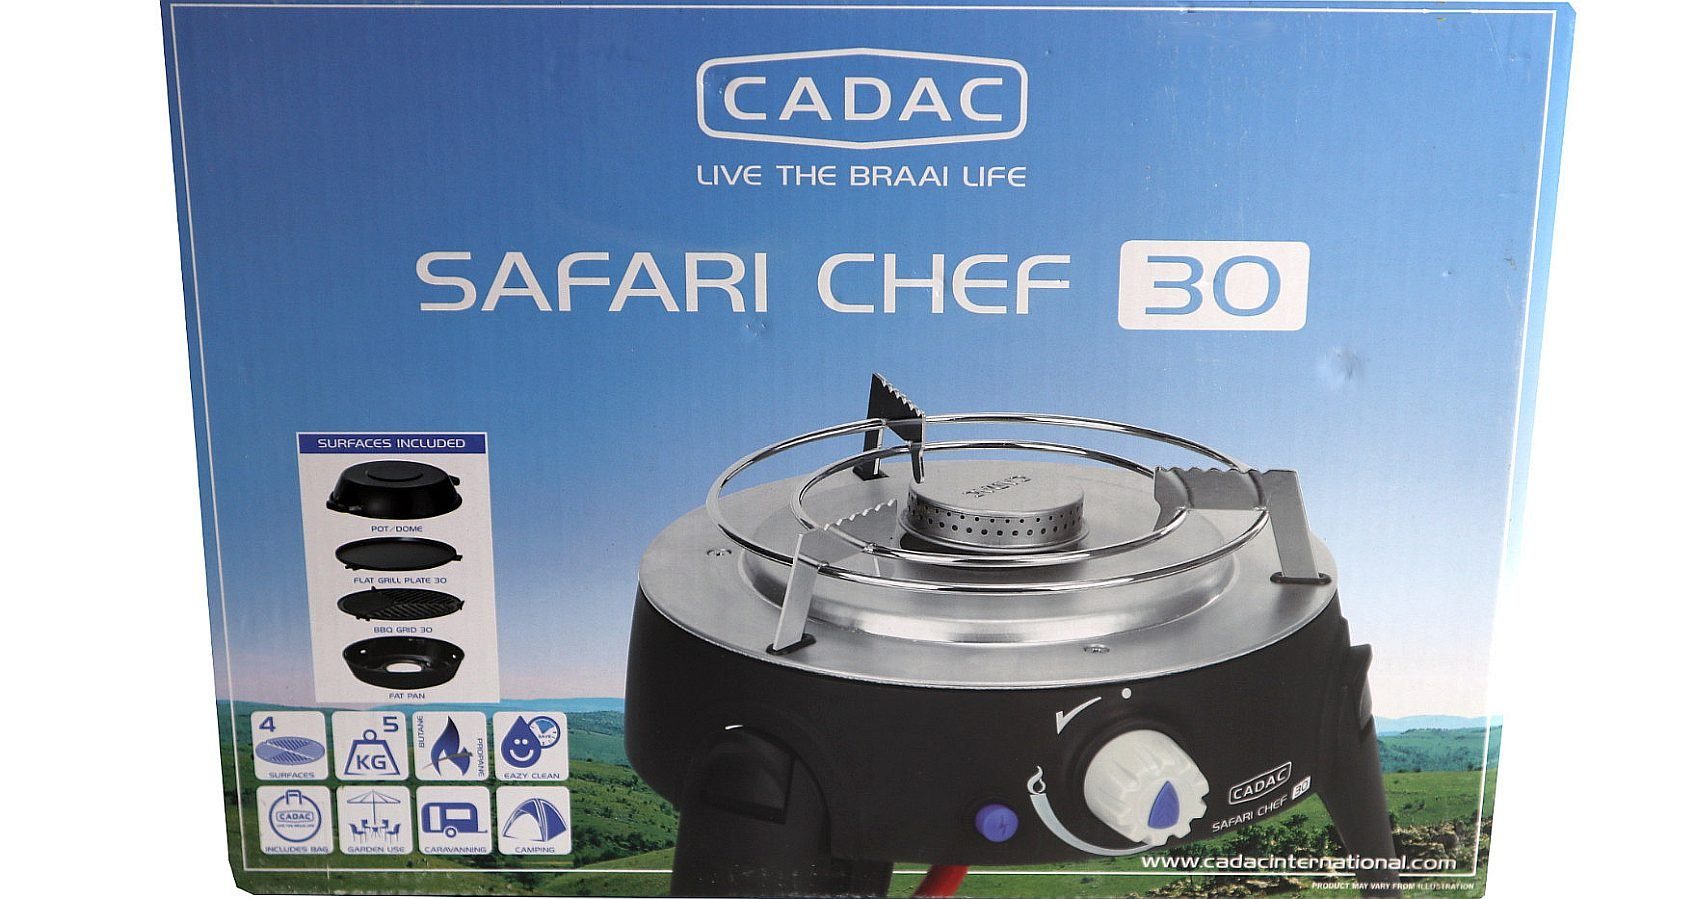 kg Camping-Gasgrill Chef CADAC 30 Grill/Kocher Safari 5 Cadac